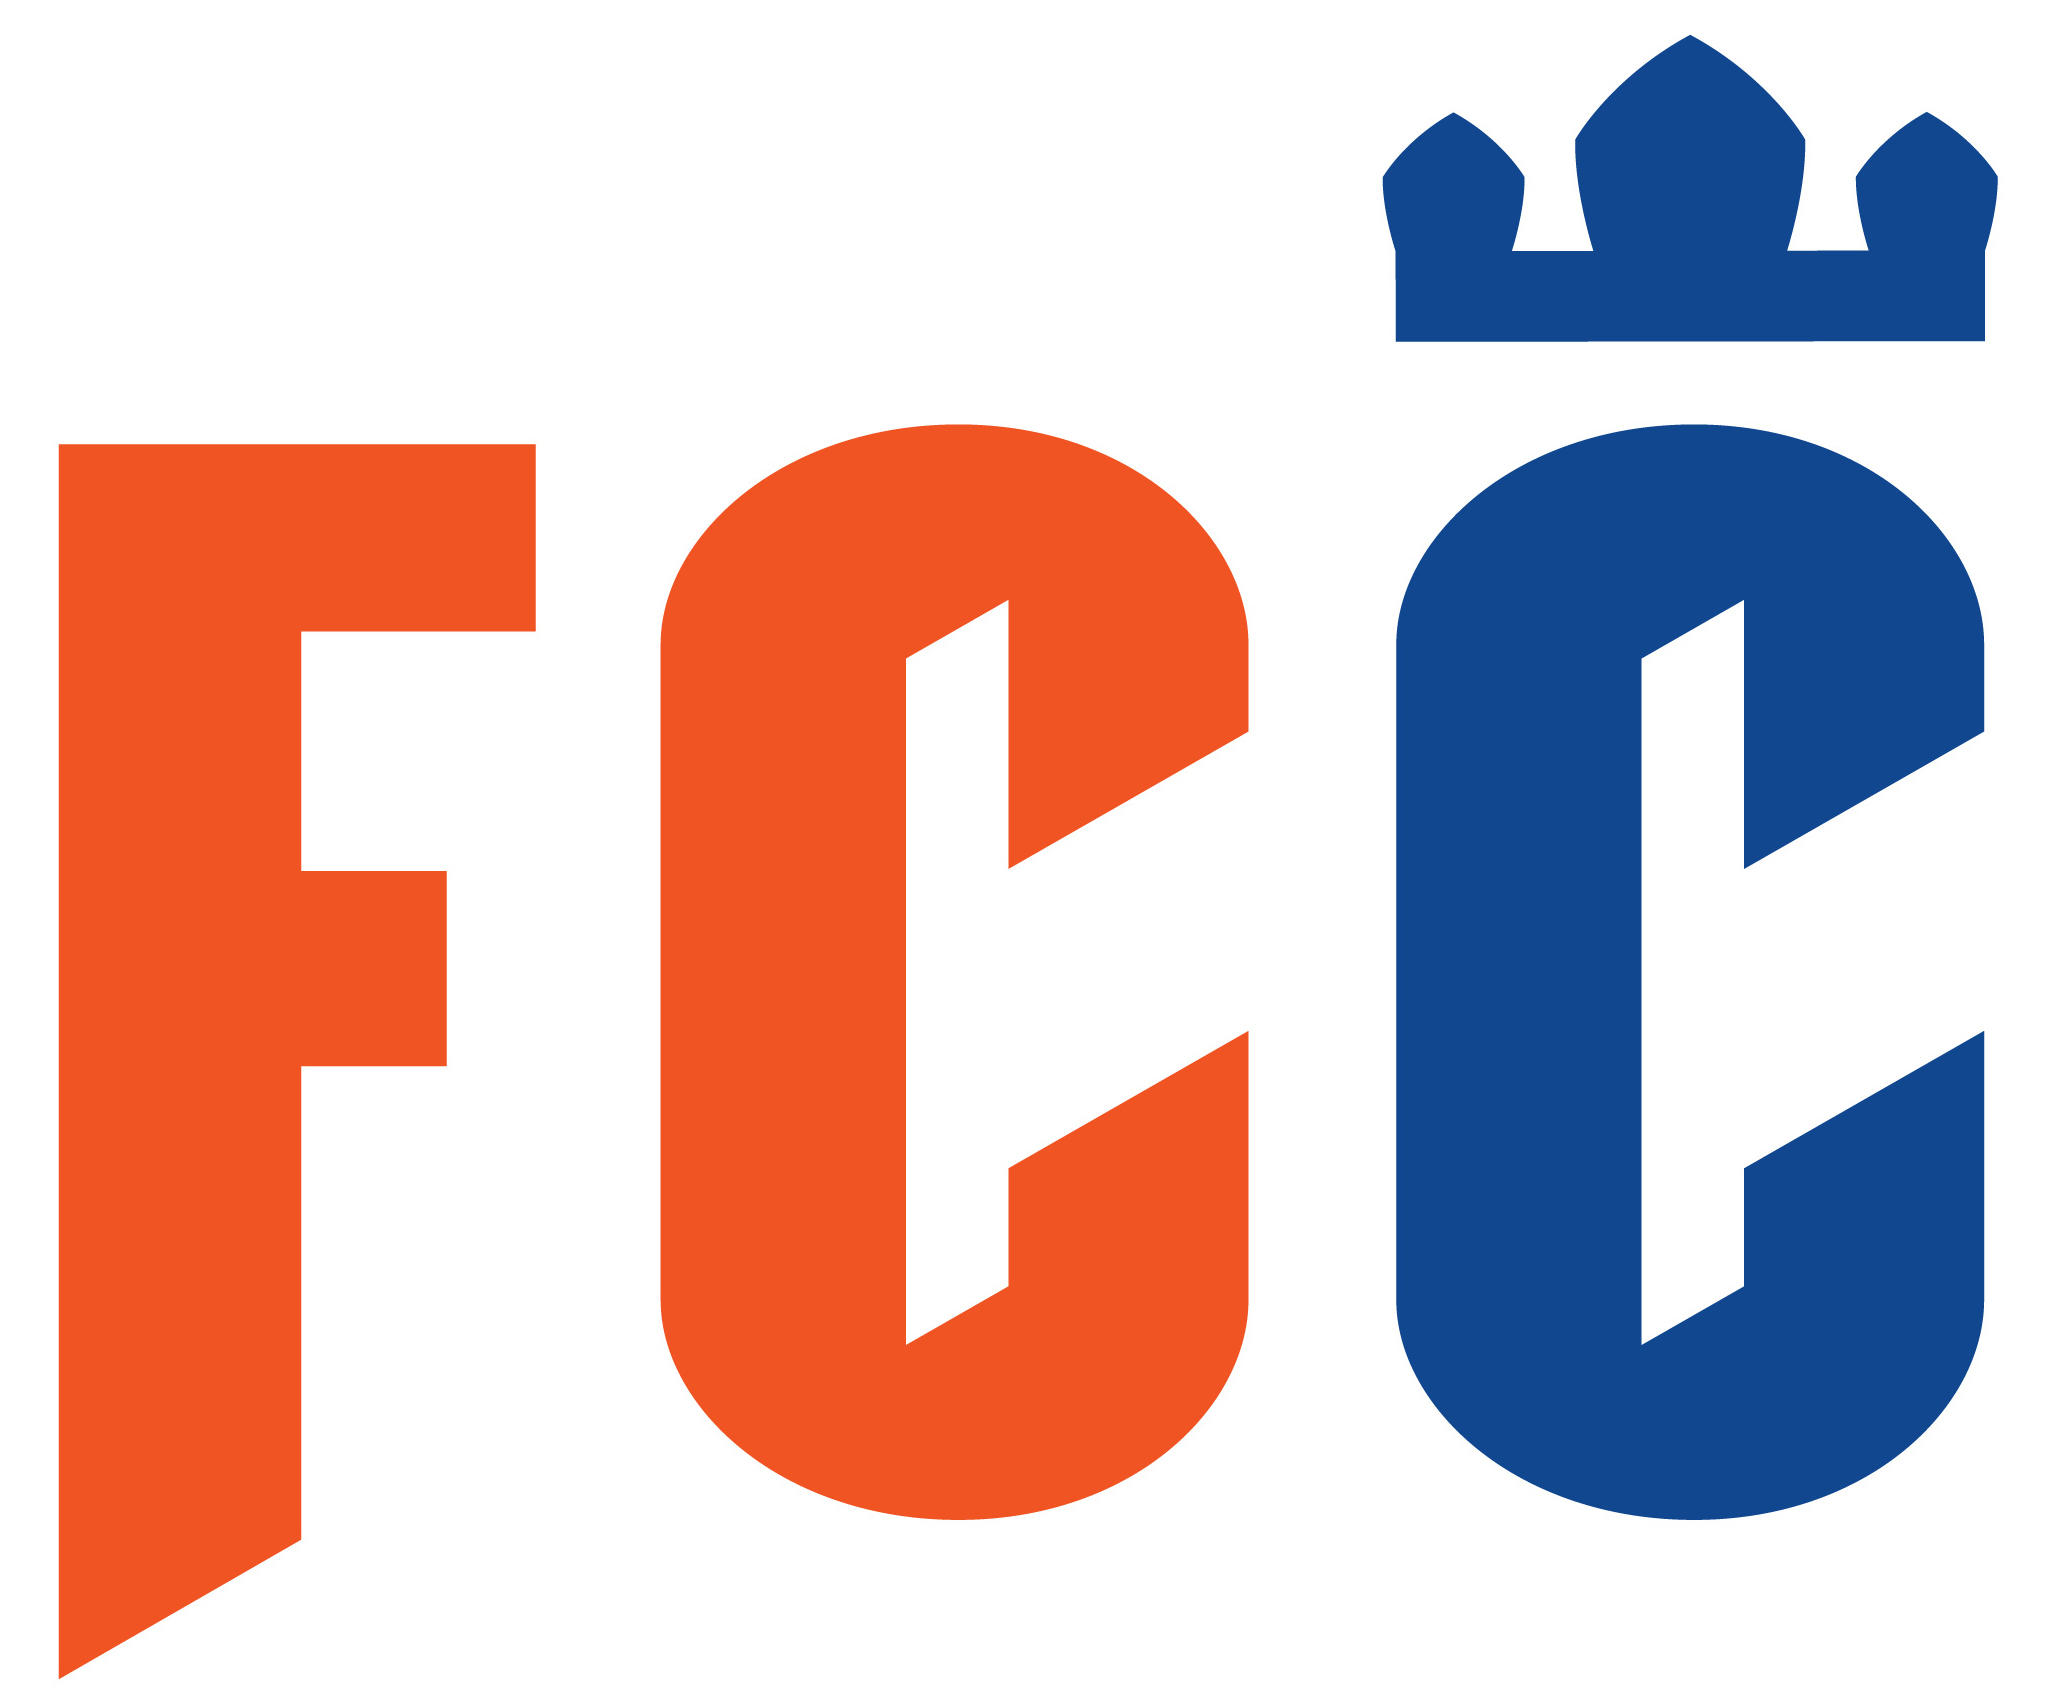 Football Club Cincinnati Check Out Fc Cincinnati S New Branding Wvxu